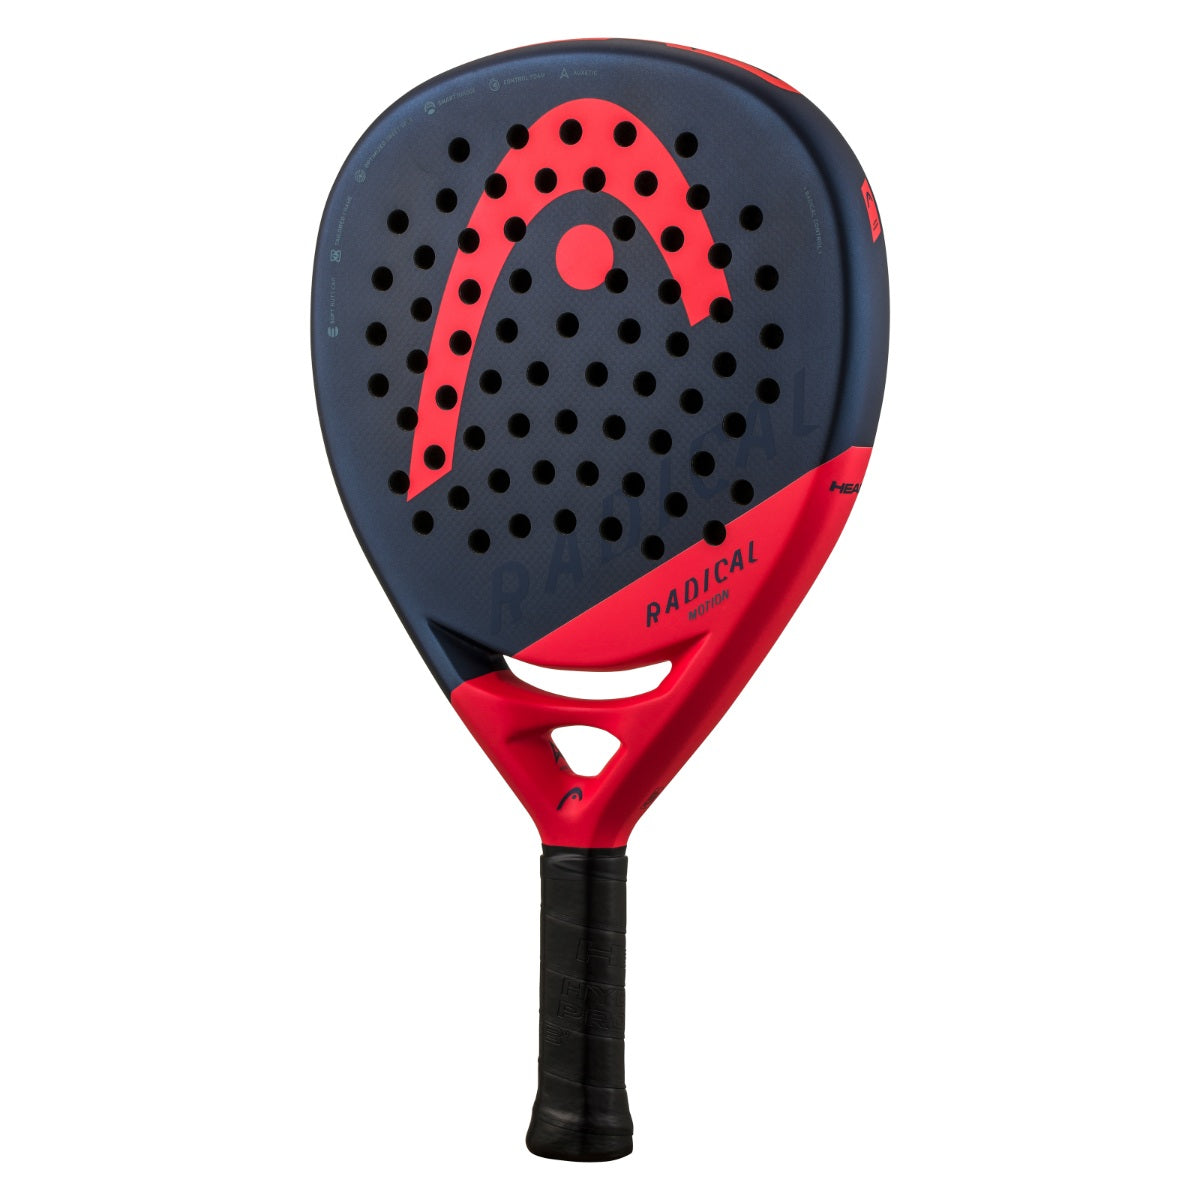 Head Radical Motion 2024 padel tennis racket main image on sale at thepadelshop.co.nz